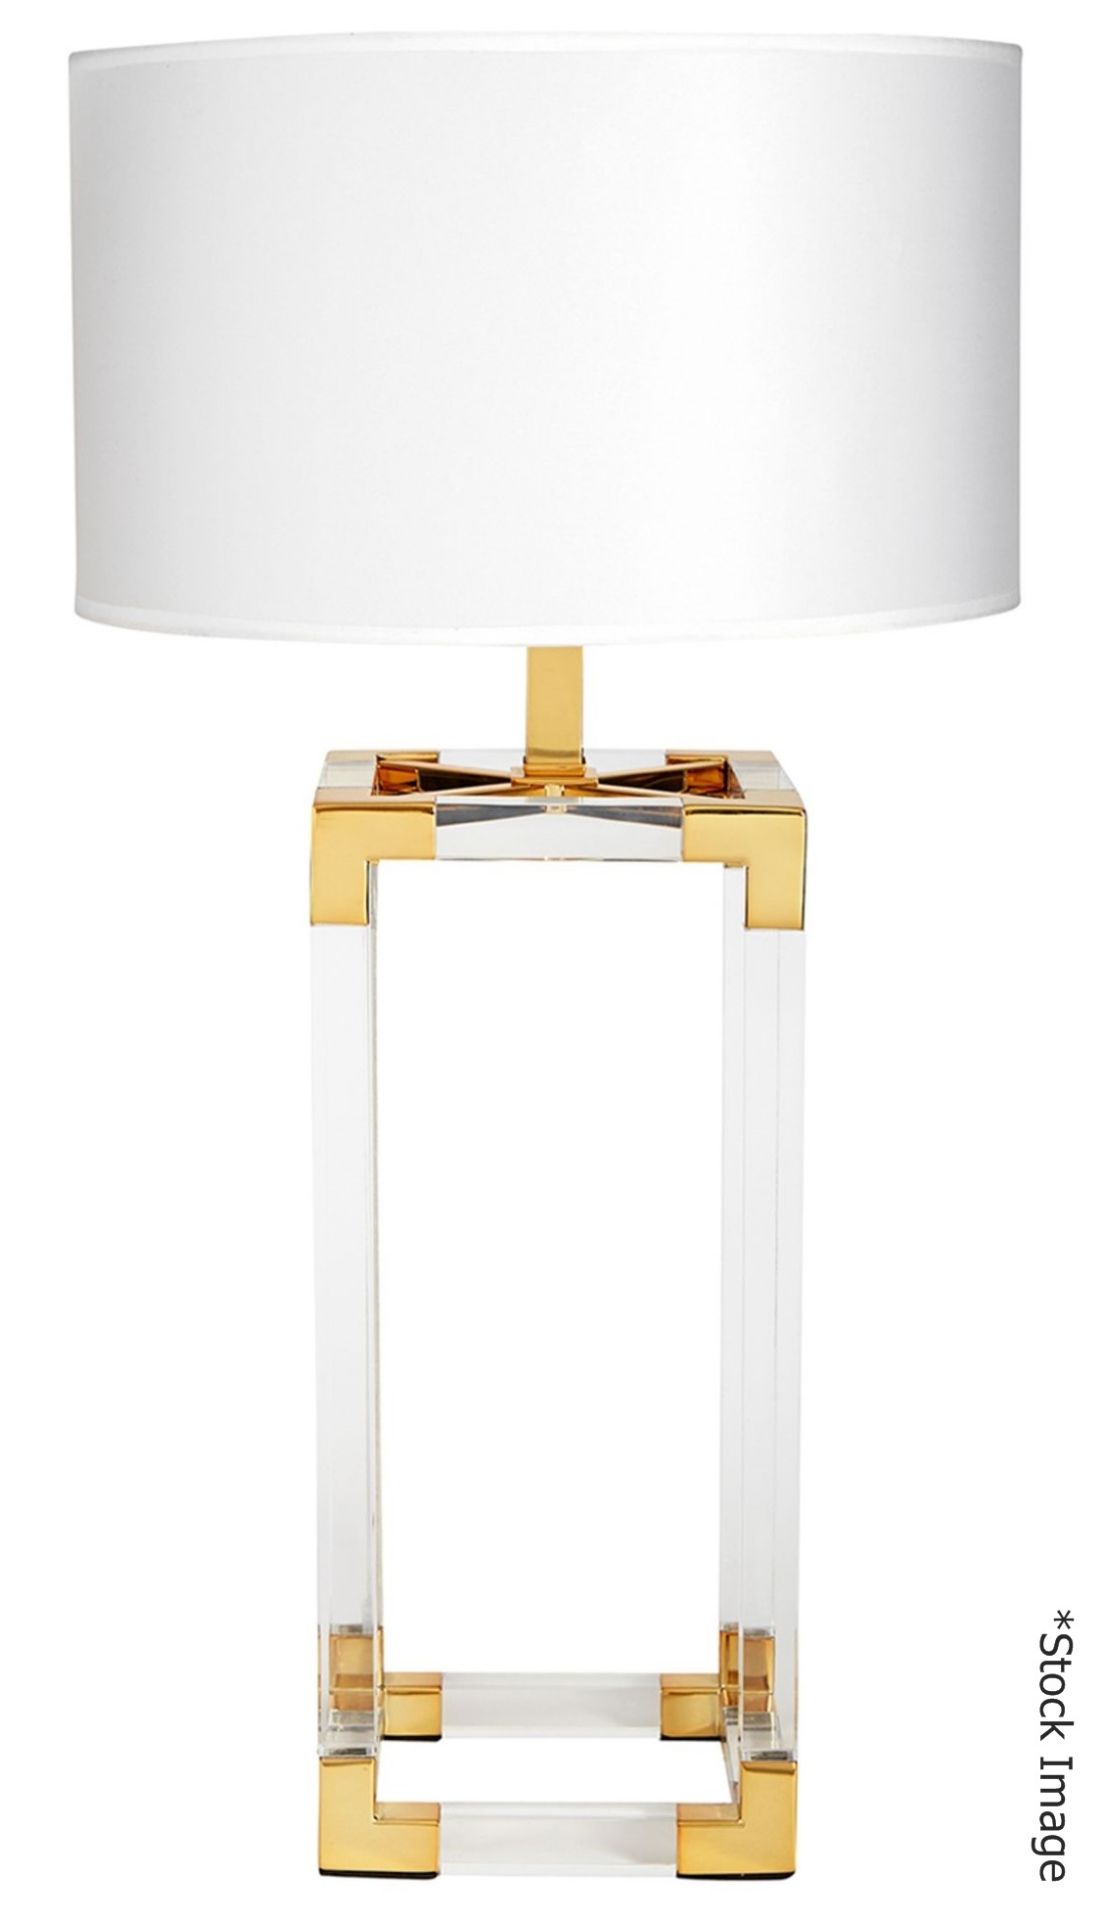 1 x JONATHAN ADLER 'Jacques' Luxury Table Lamp - Original Price £850.00 - Unused Boxed Stock - - Image 2 of 12